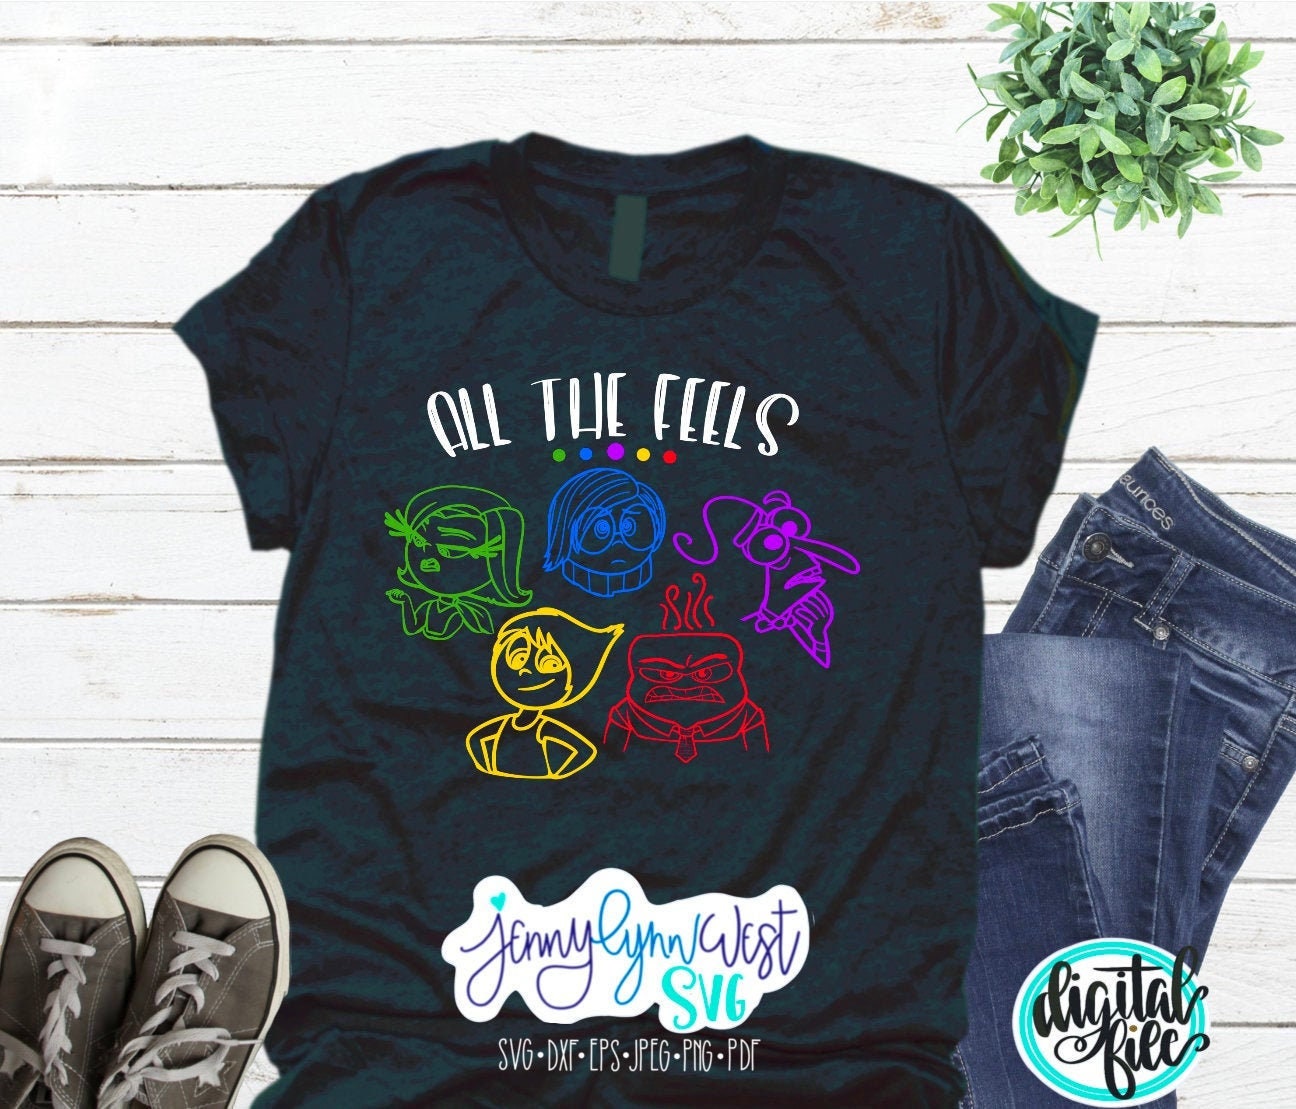 Disney Pixar Inside Out Simple Group Shot Graphic T-Shirt, Joy Fear Sadness  Disgust Anger Face Shirt Unisex Adult T-shir